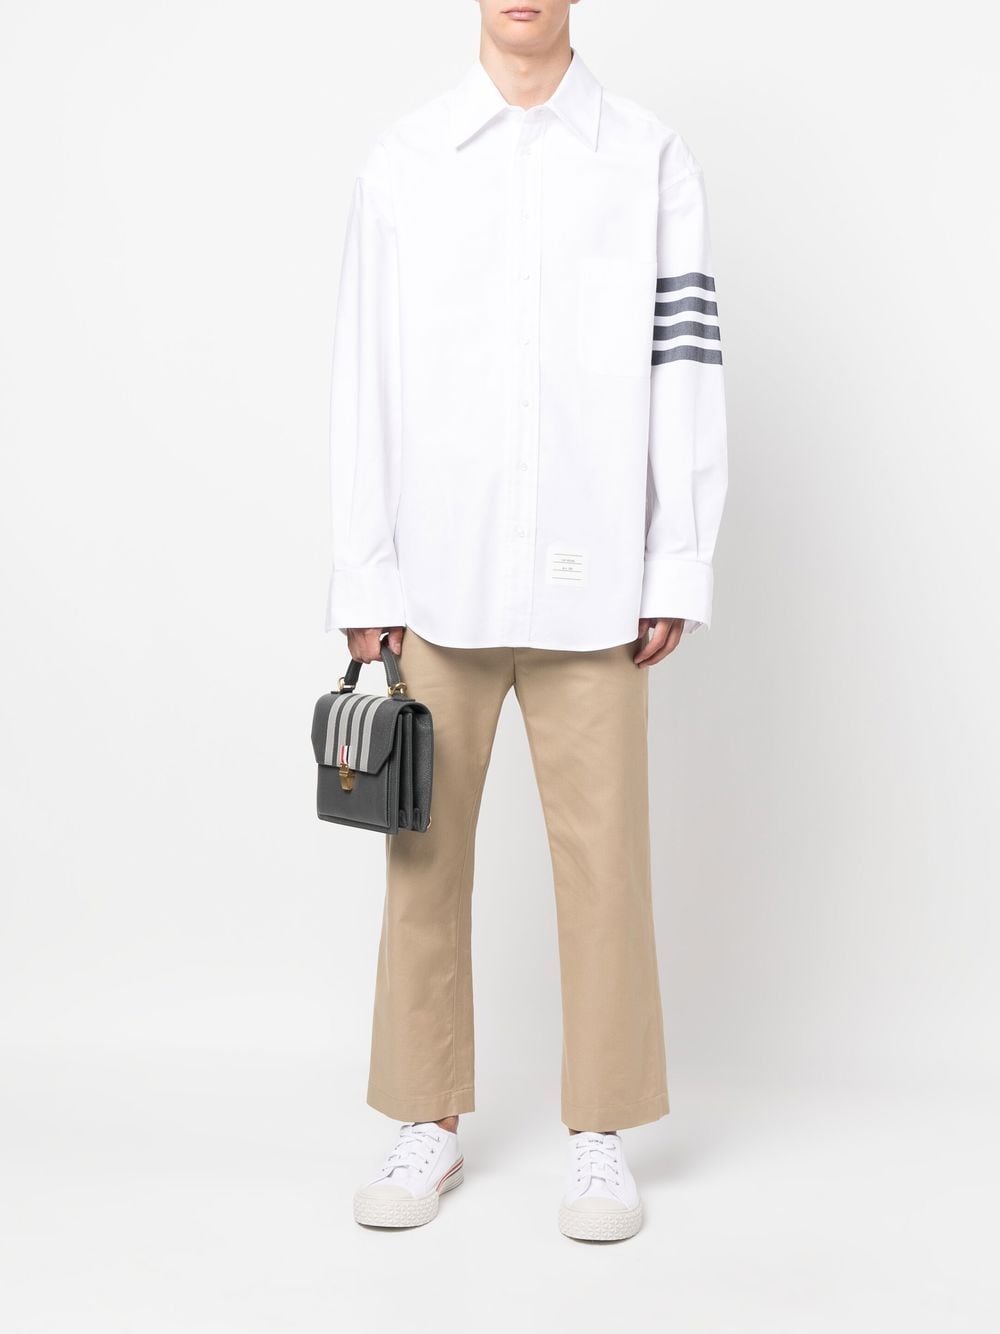 Thom Browne White French Cuff Shirt